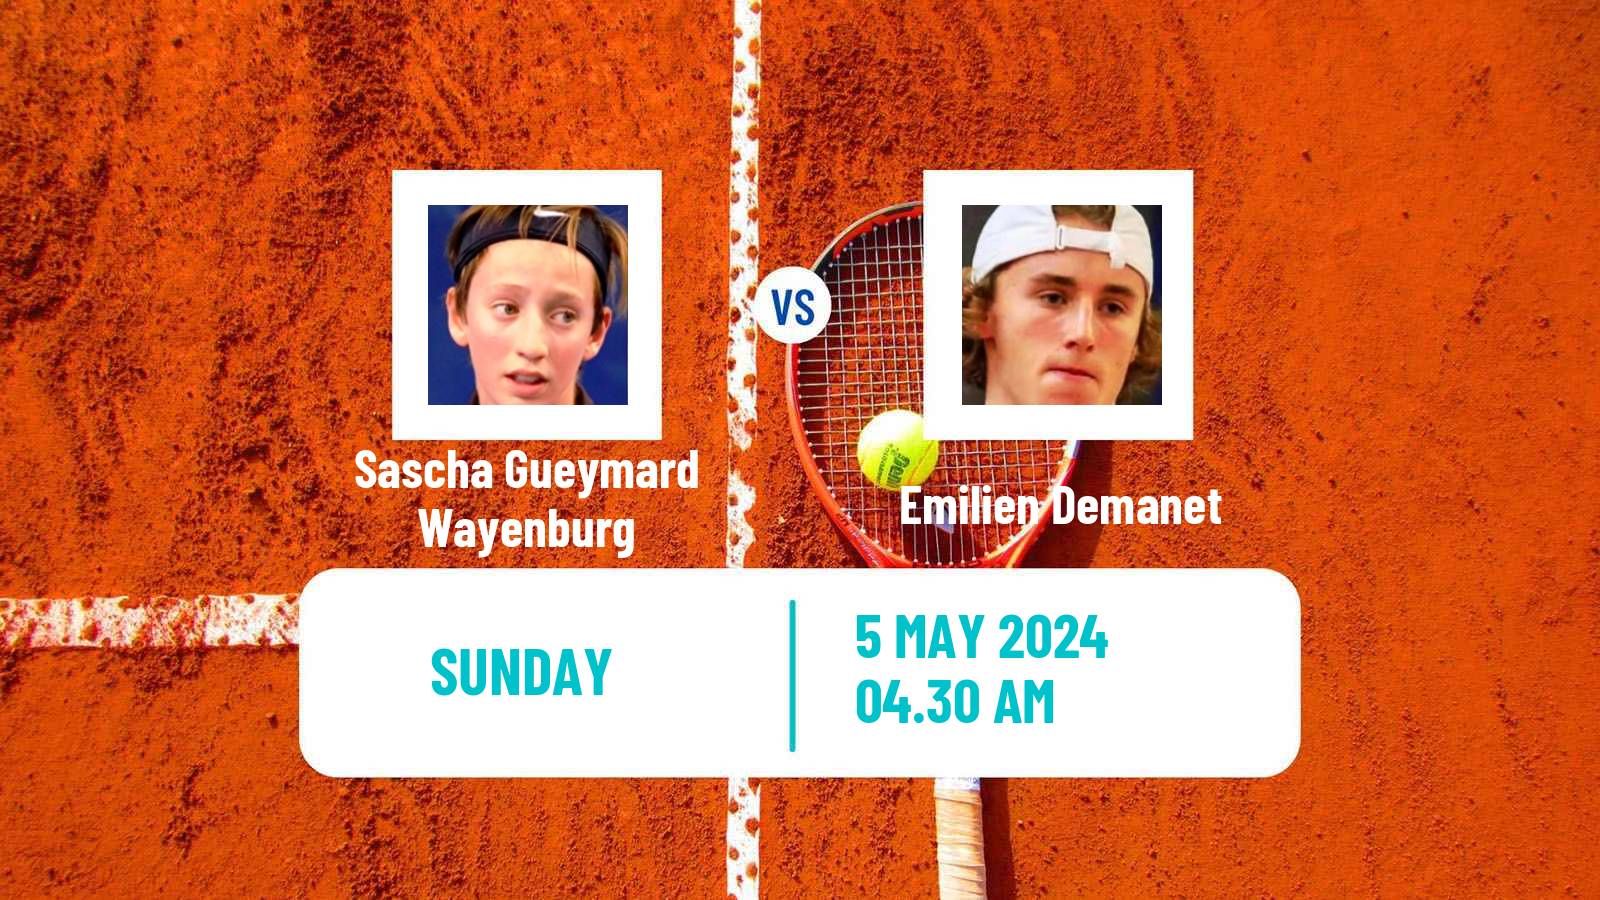 Tennis ITF M15 Kursumlijska Banja 3 Men Sascha Gueymard Wayenburg - Emilien Demanet